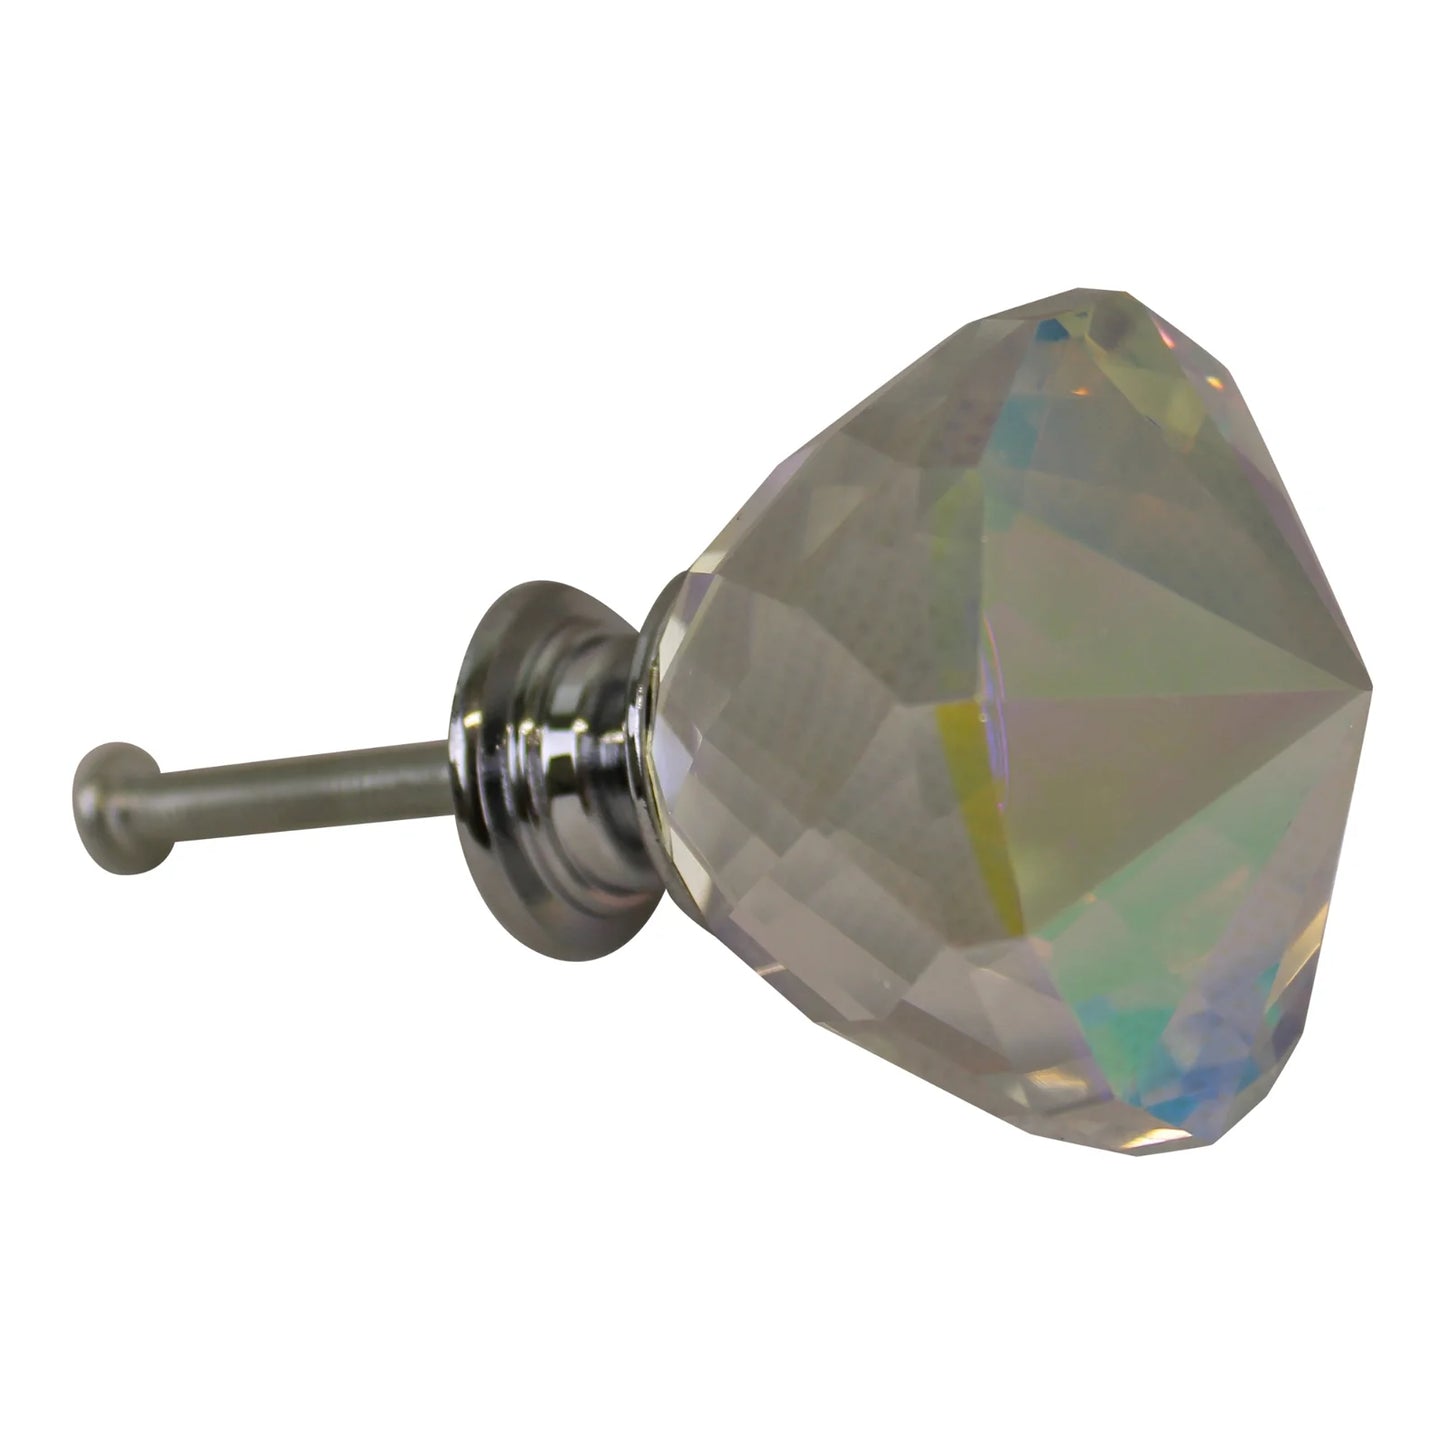 Crystal Effect Doorknobs, Diamond Shaped, set of 4 4cm